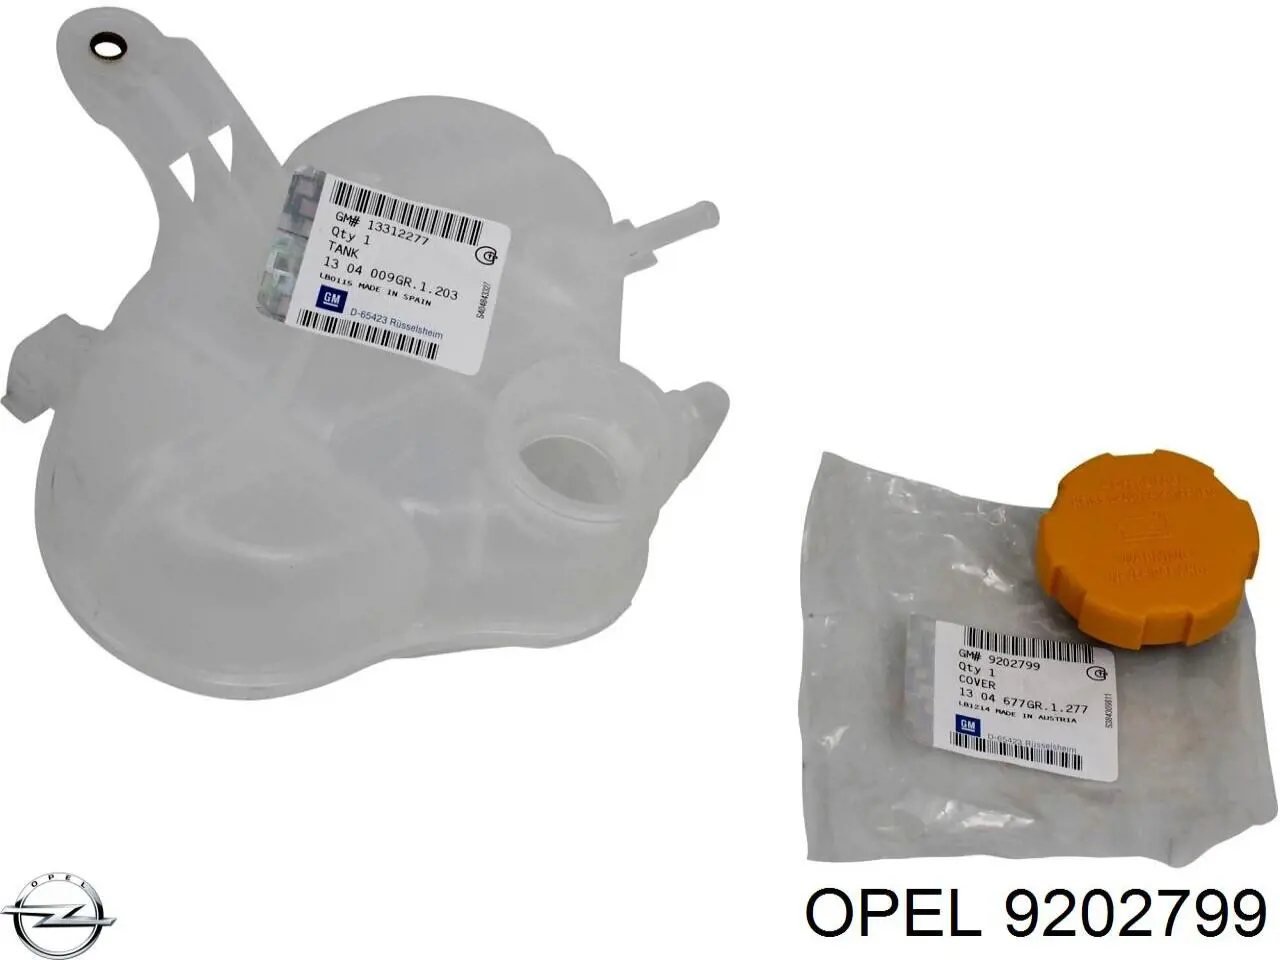 9202799 Opel крышка (пробка расширительного бачка)